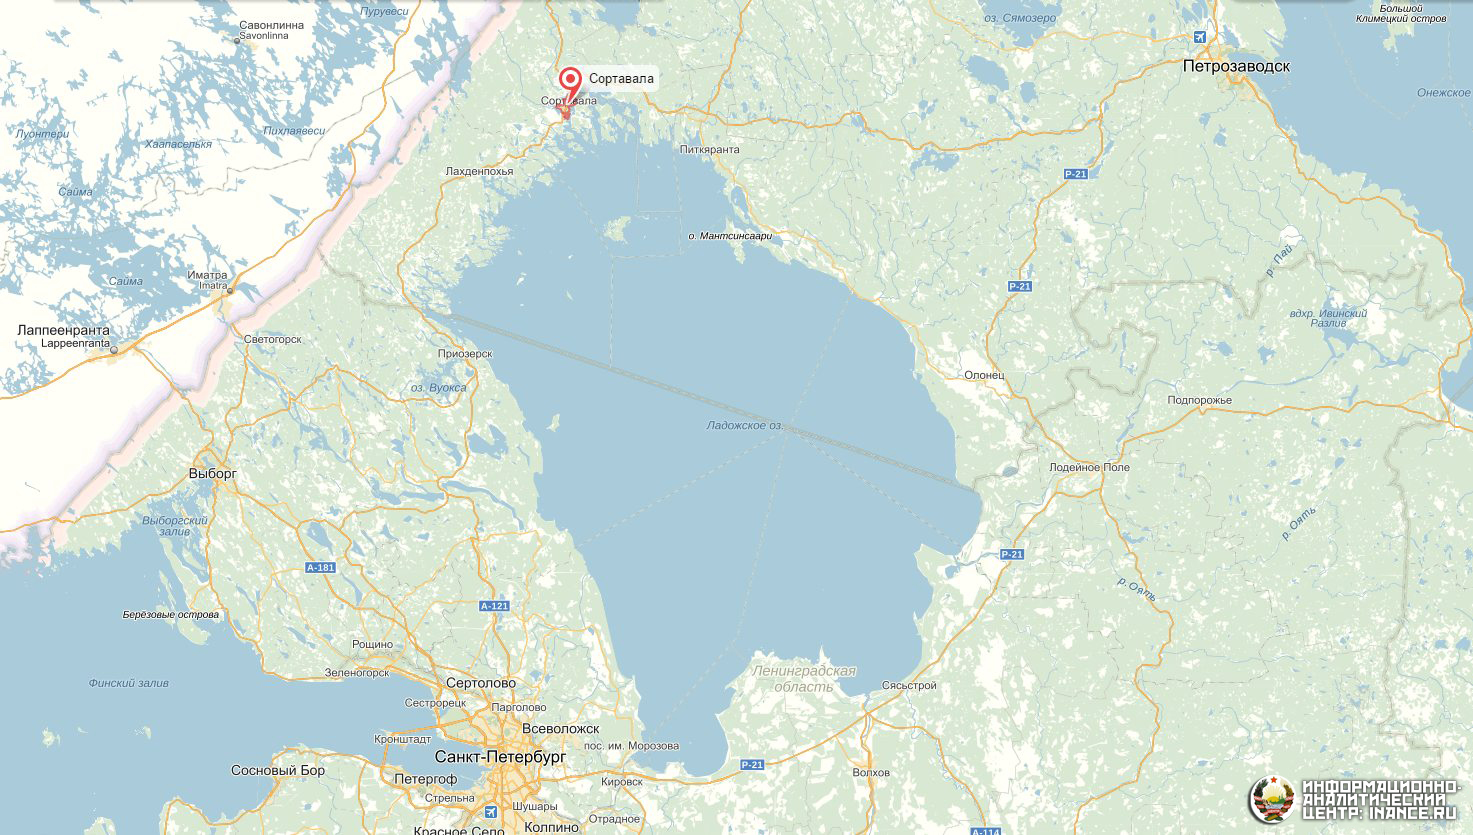 Сортавала на карте россии. Сортавала на карте Карелии. Карта Сортавала с озерами. Петрозаводск на карте Карелии.